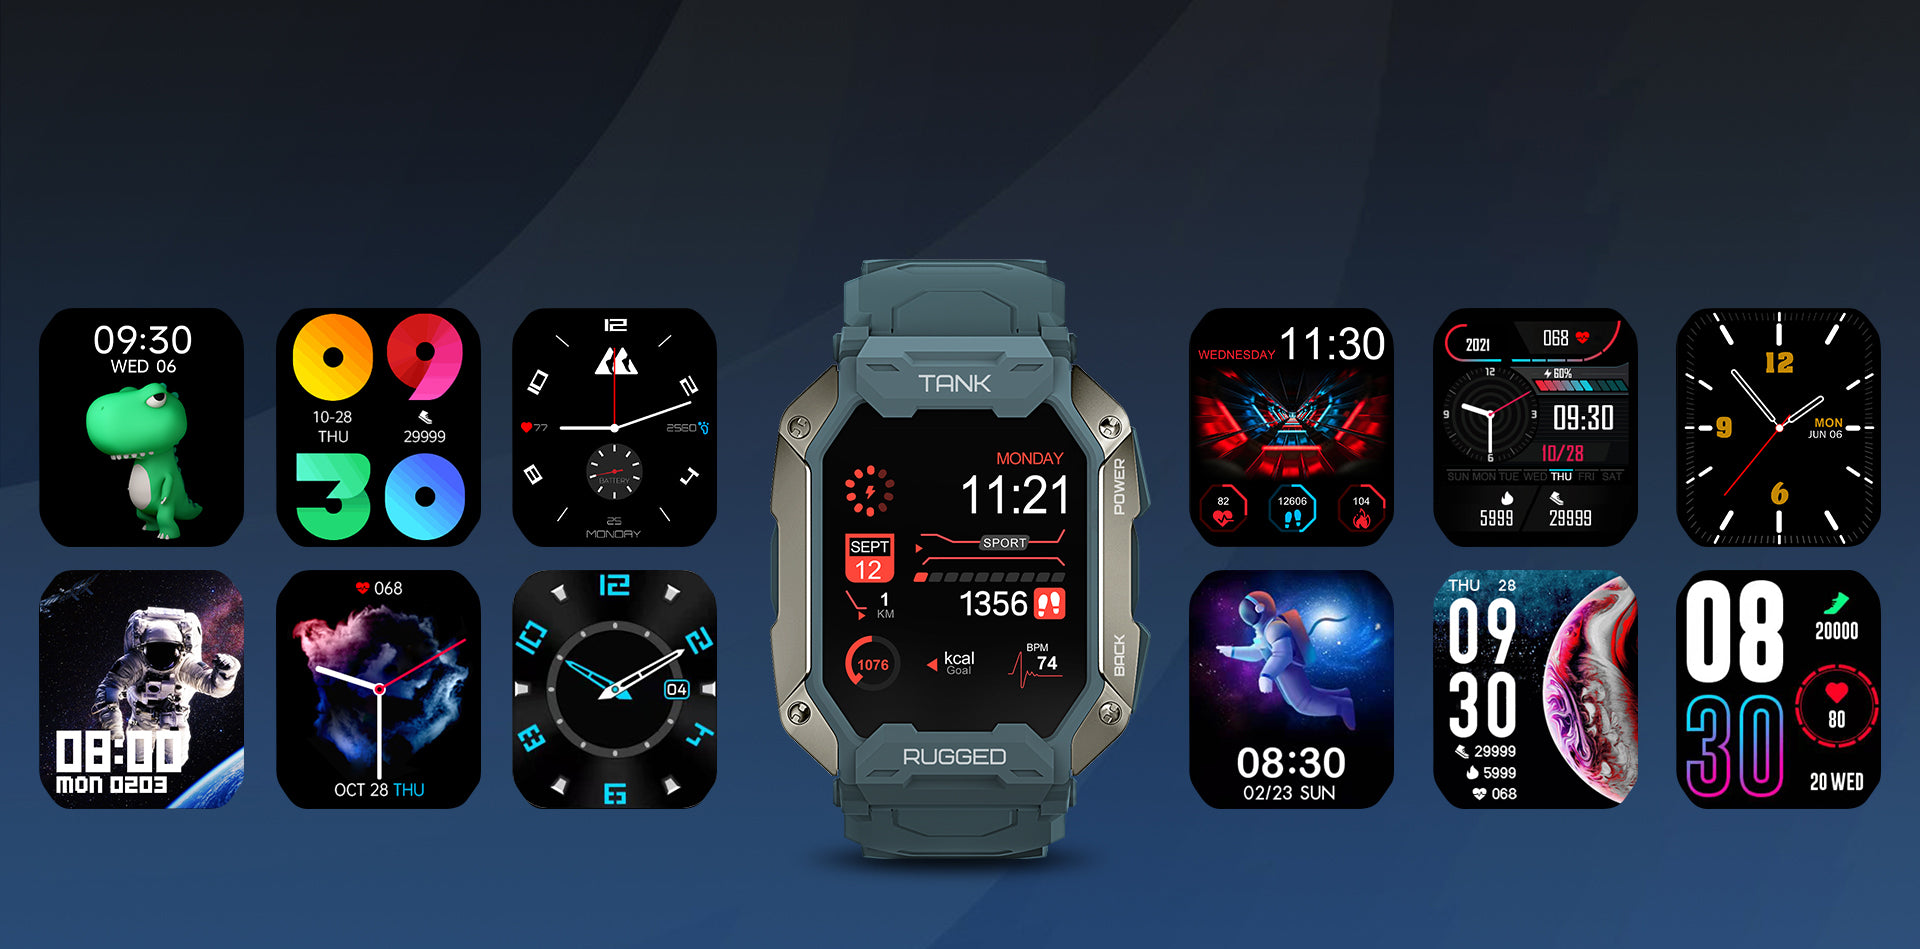 KOSPET TANK M1 PRO Smartwatch support change multi watch face